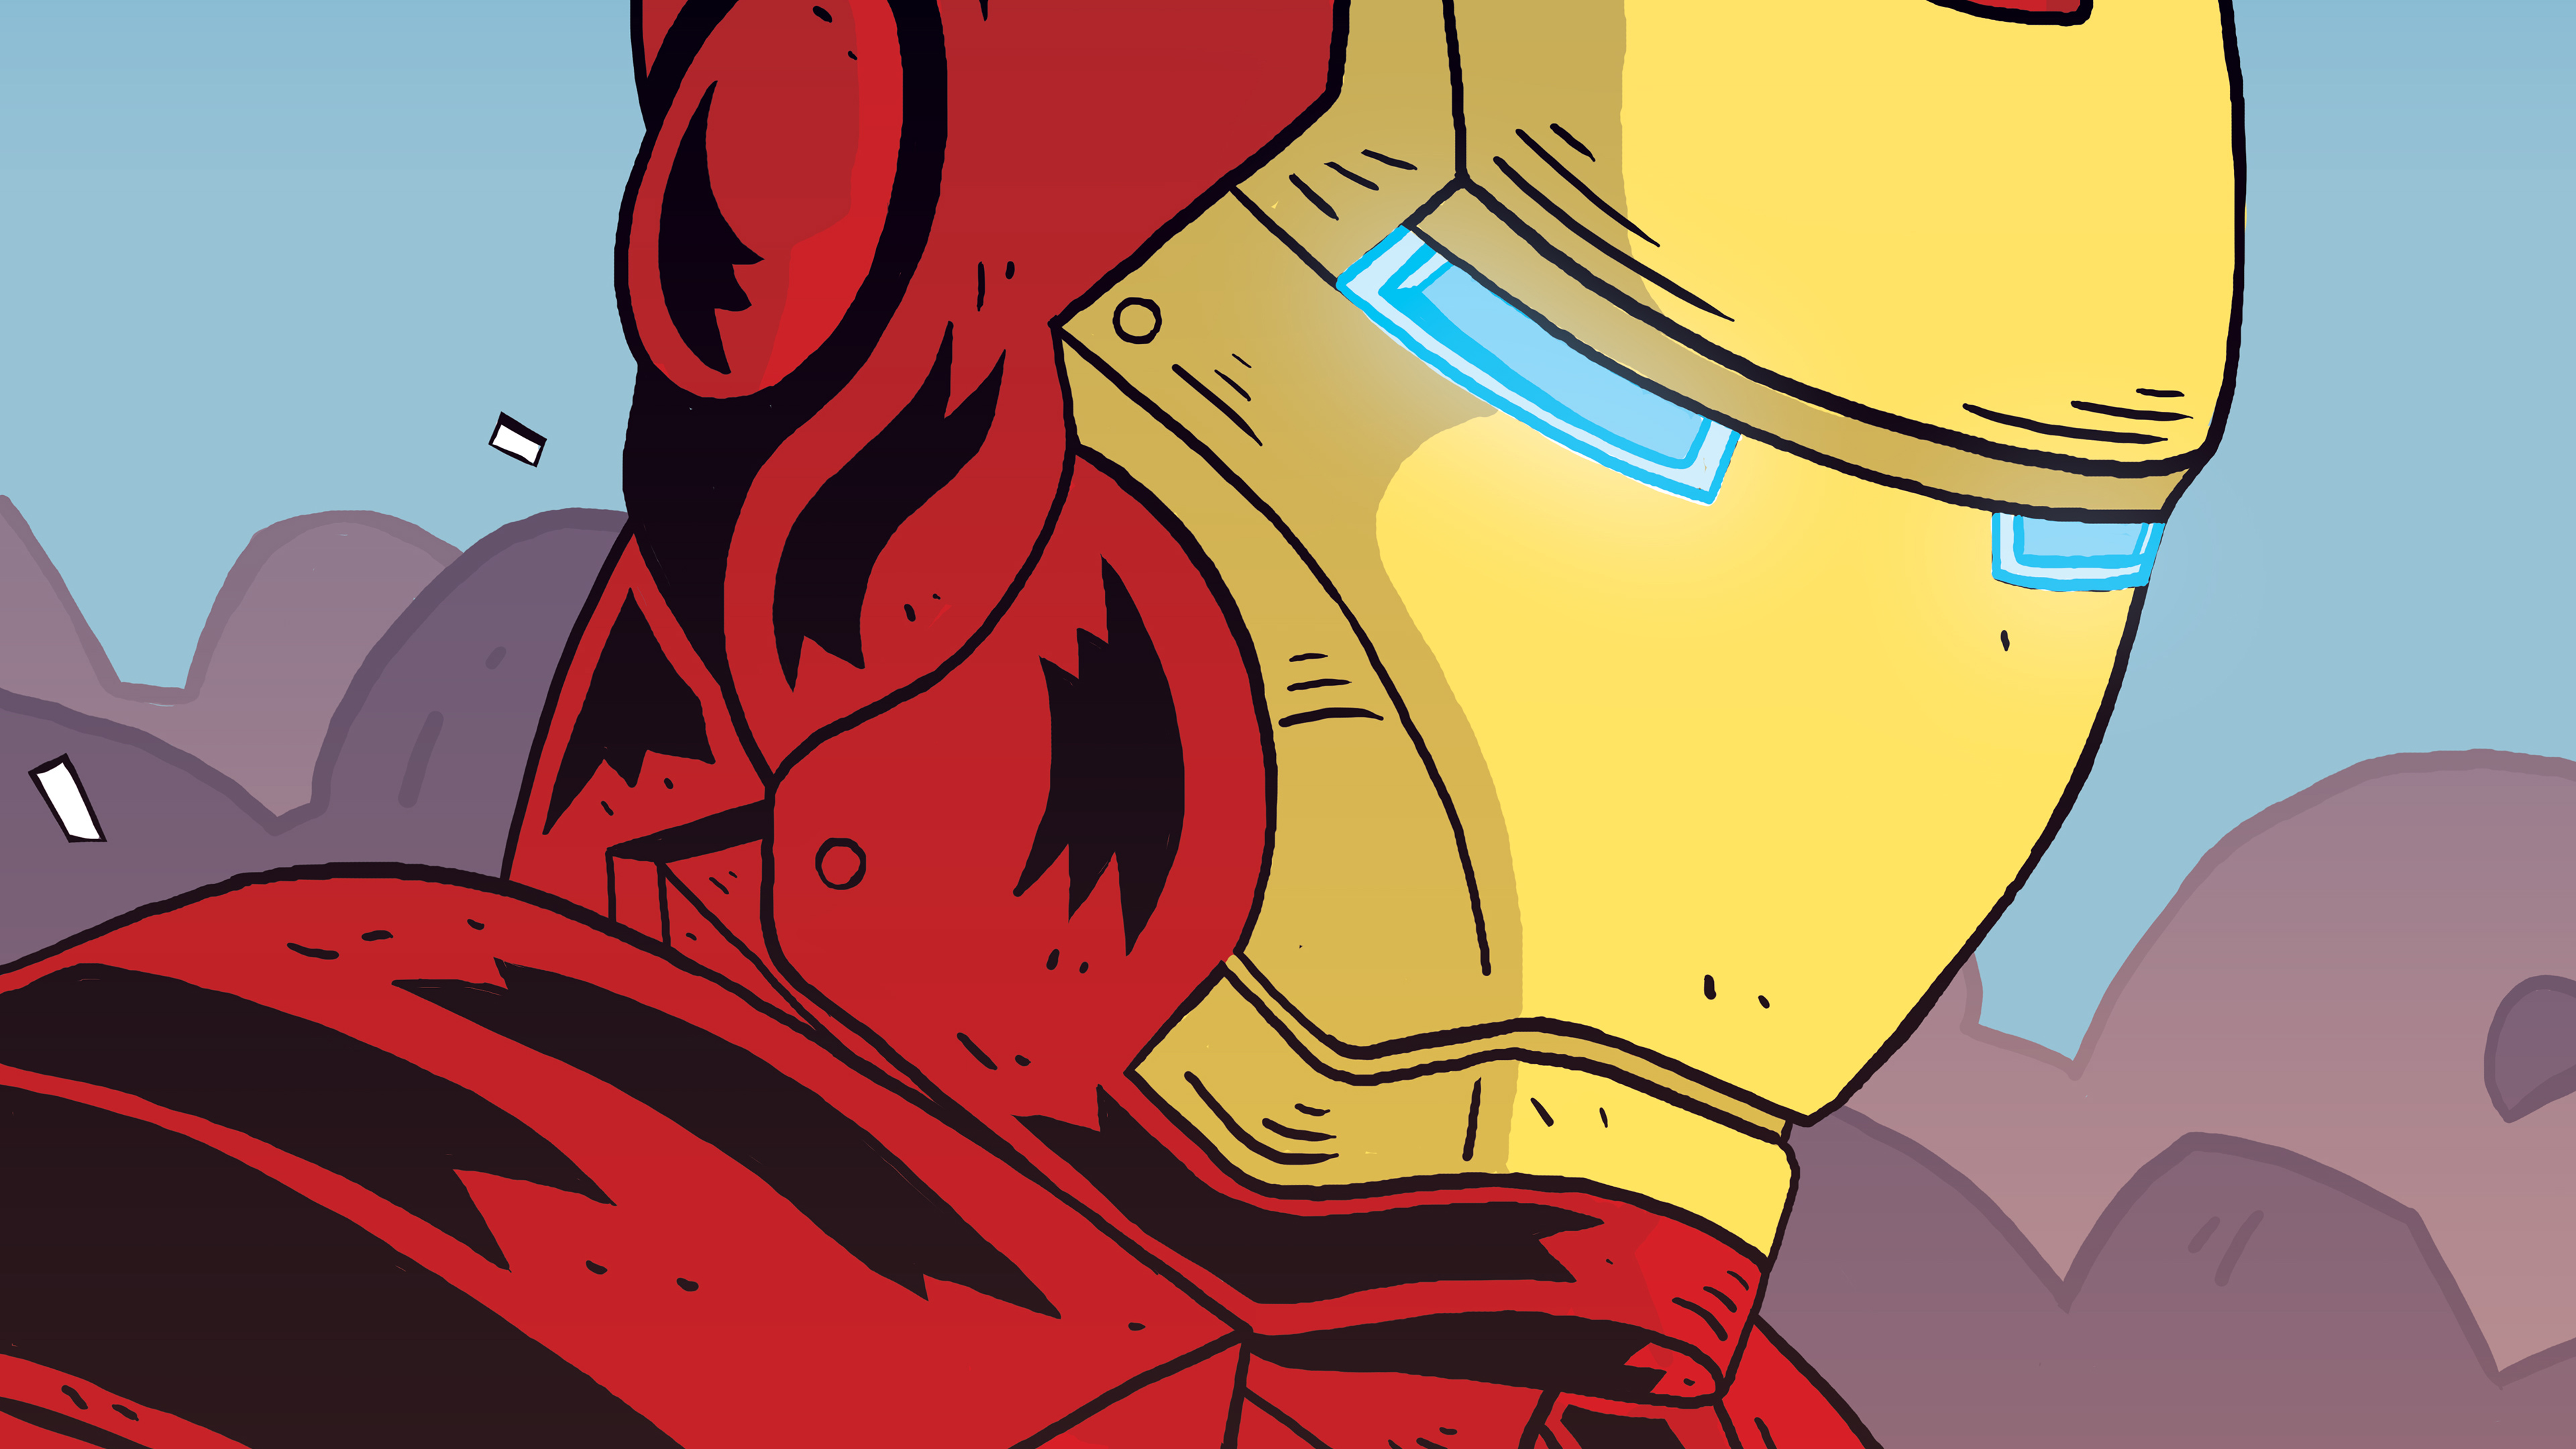  Iron  Man  Comic Cartoon  Art superheroes wallpapers  iron  